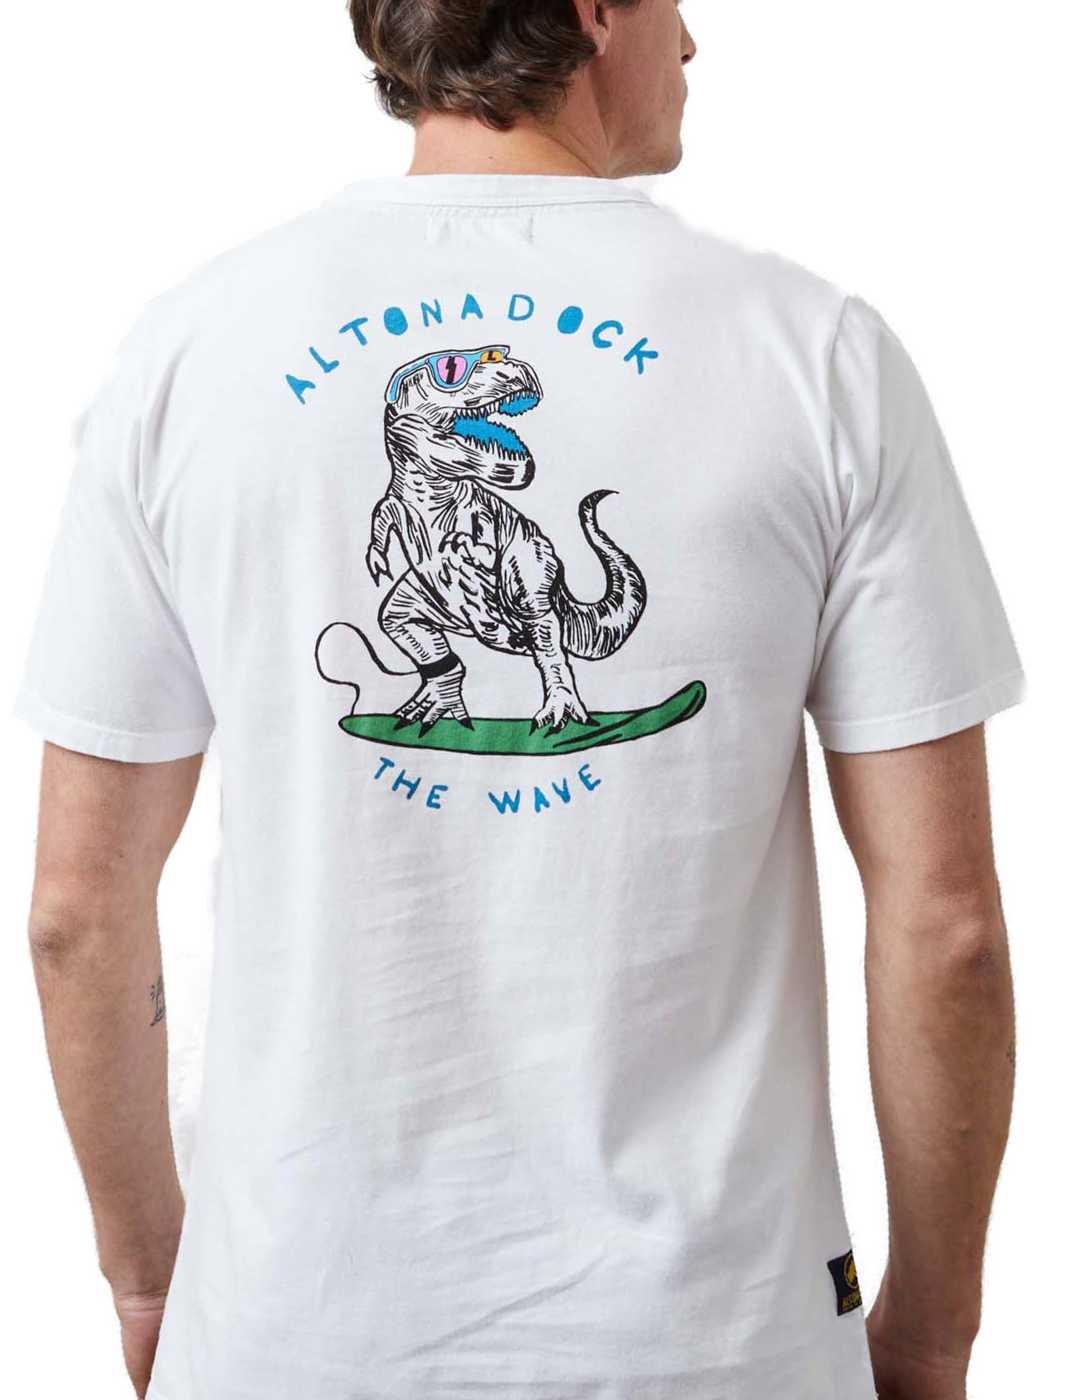 Camiseta Altonadock blanca dinosaurio T-Rex para hombre